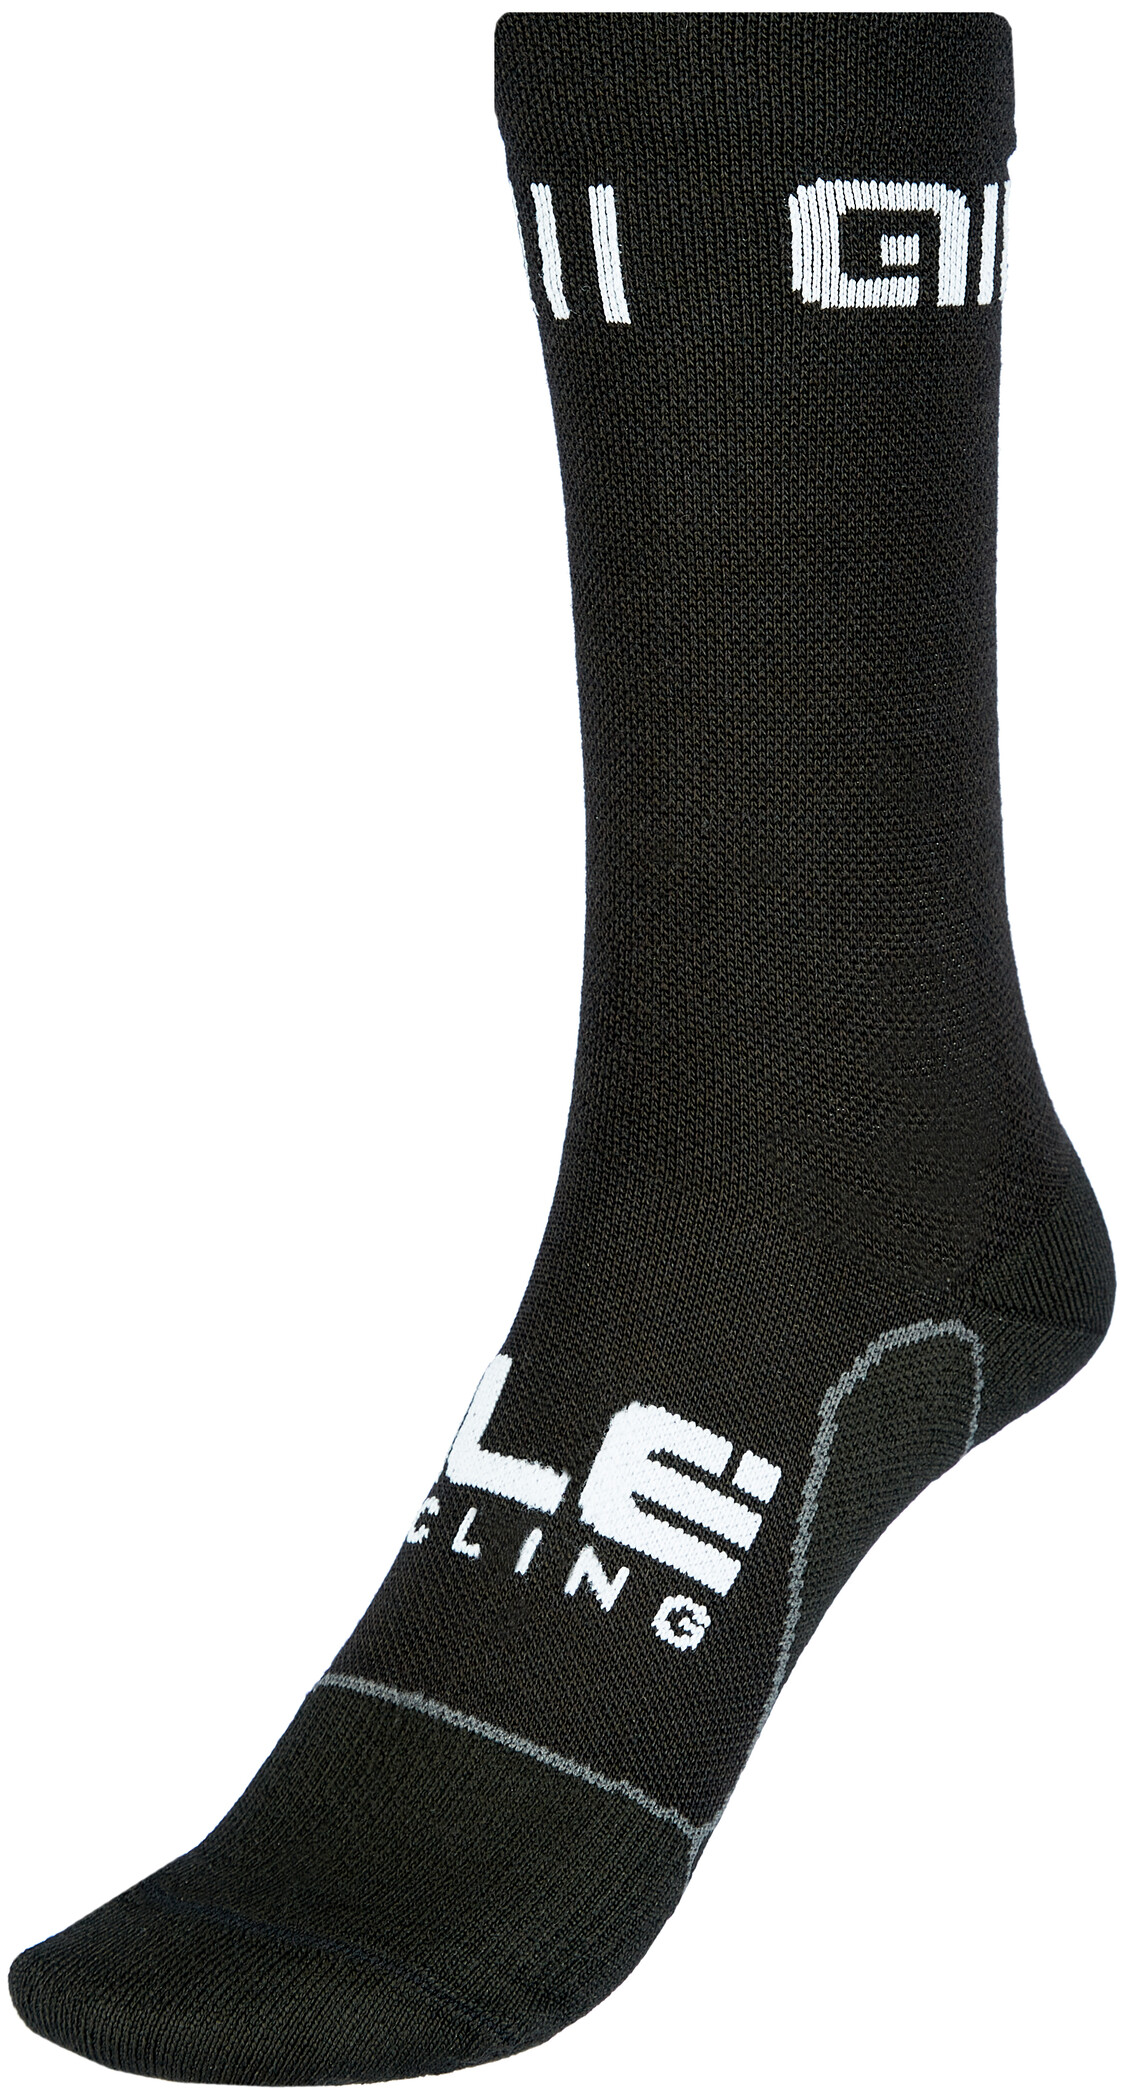 Ale Cycling Socks Thermo Primaloft Black/Yellow Fluo-18 cm cuff|BRAND NEW 